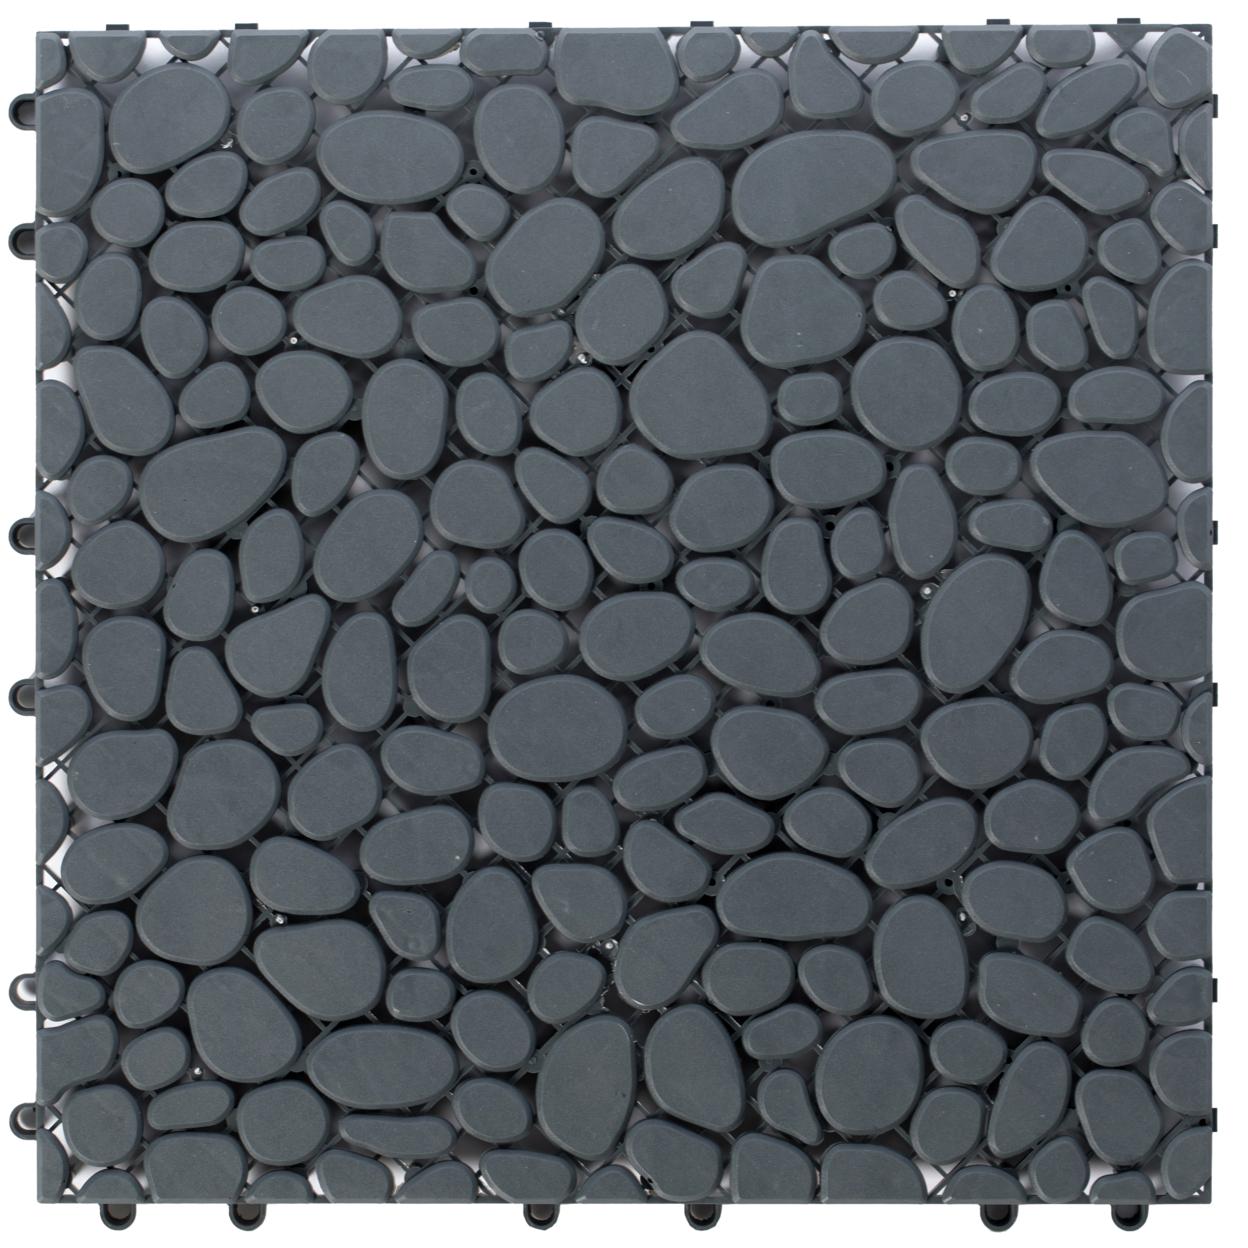 Interlocking Cobbled Stone Look Garden Pathway Tiles, Decorative Floor Grass Pavers Anti- Slip Mat, 5 Pack